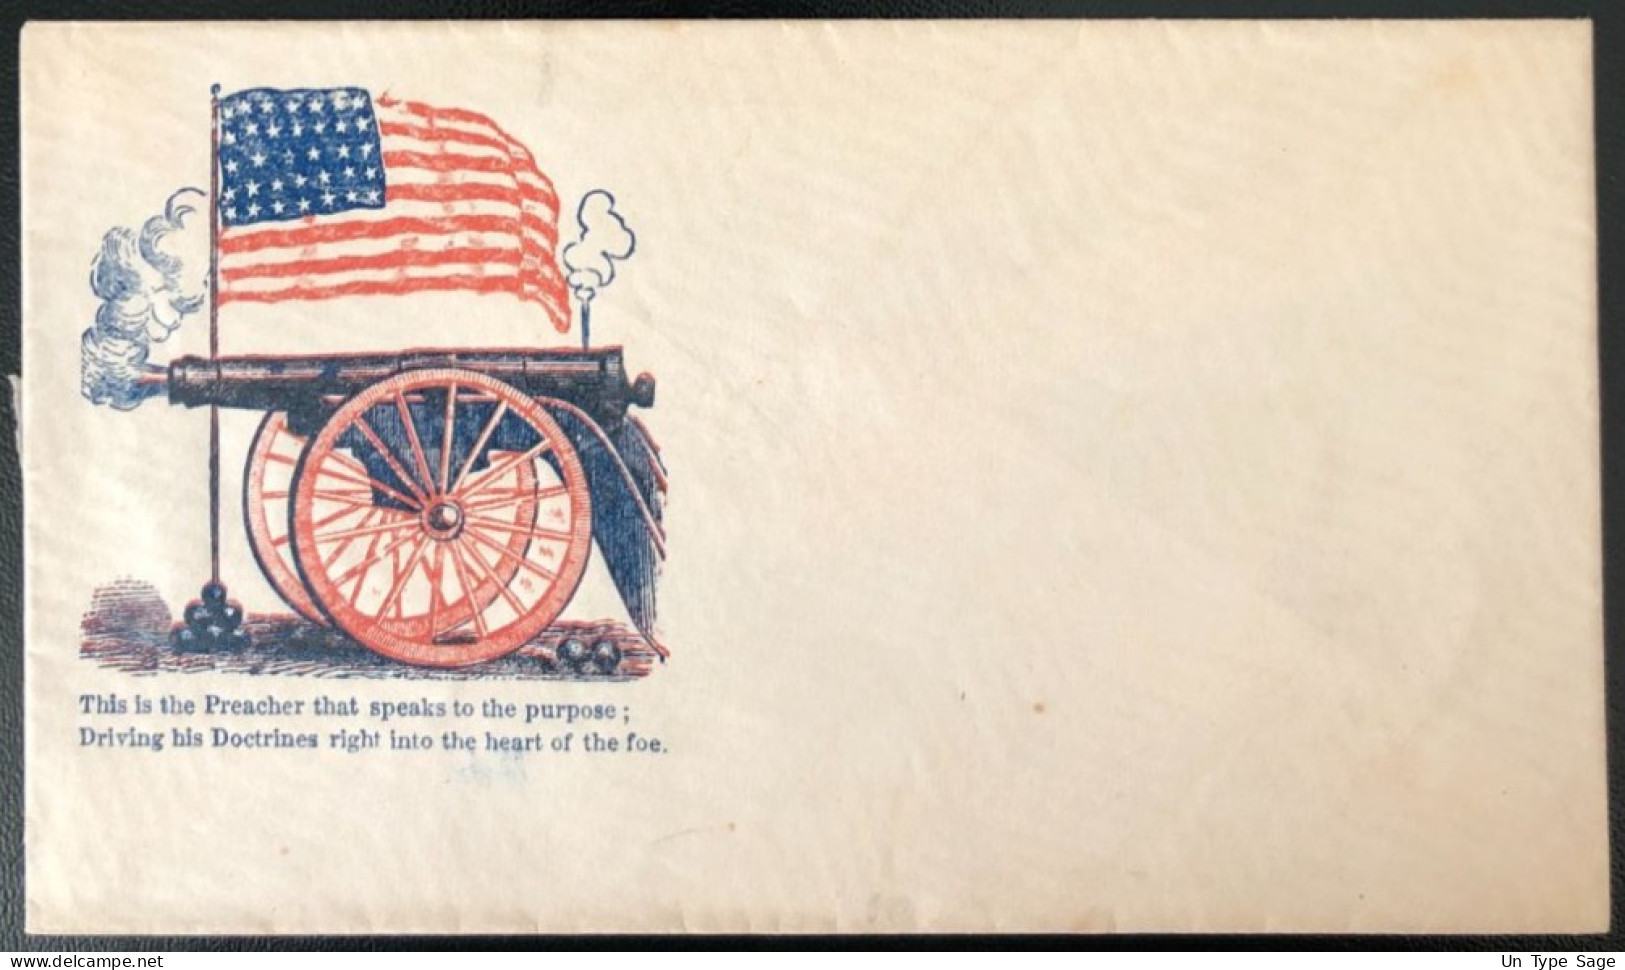 U.S.A, Civil War, Patriotic Cover - "(flag)" - Unused - (C443) - Postal History